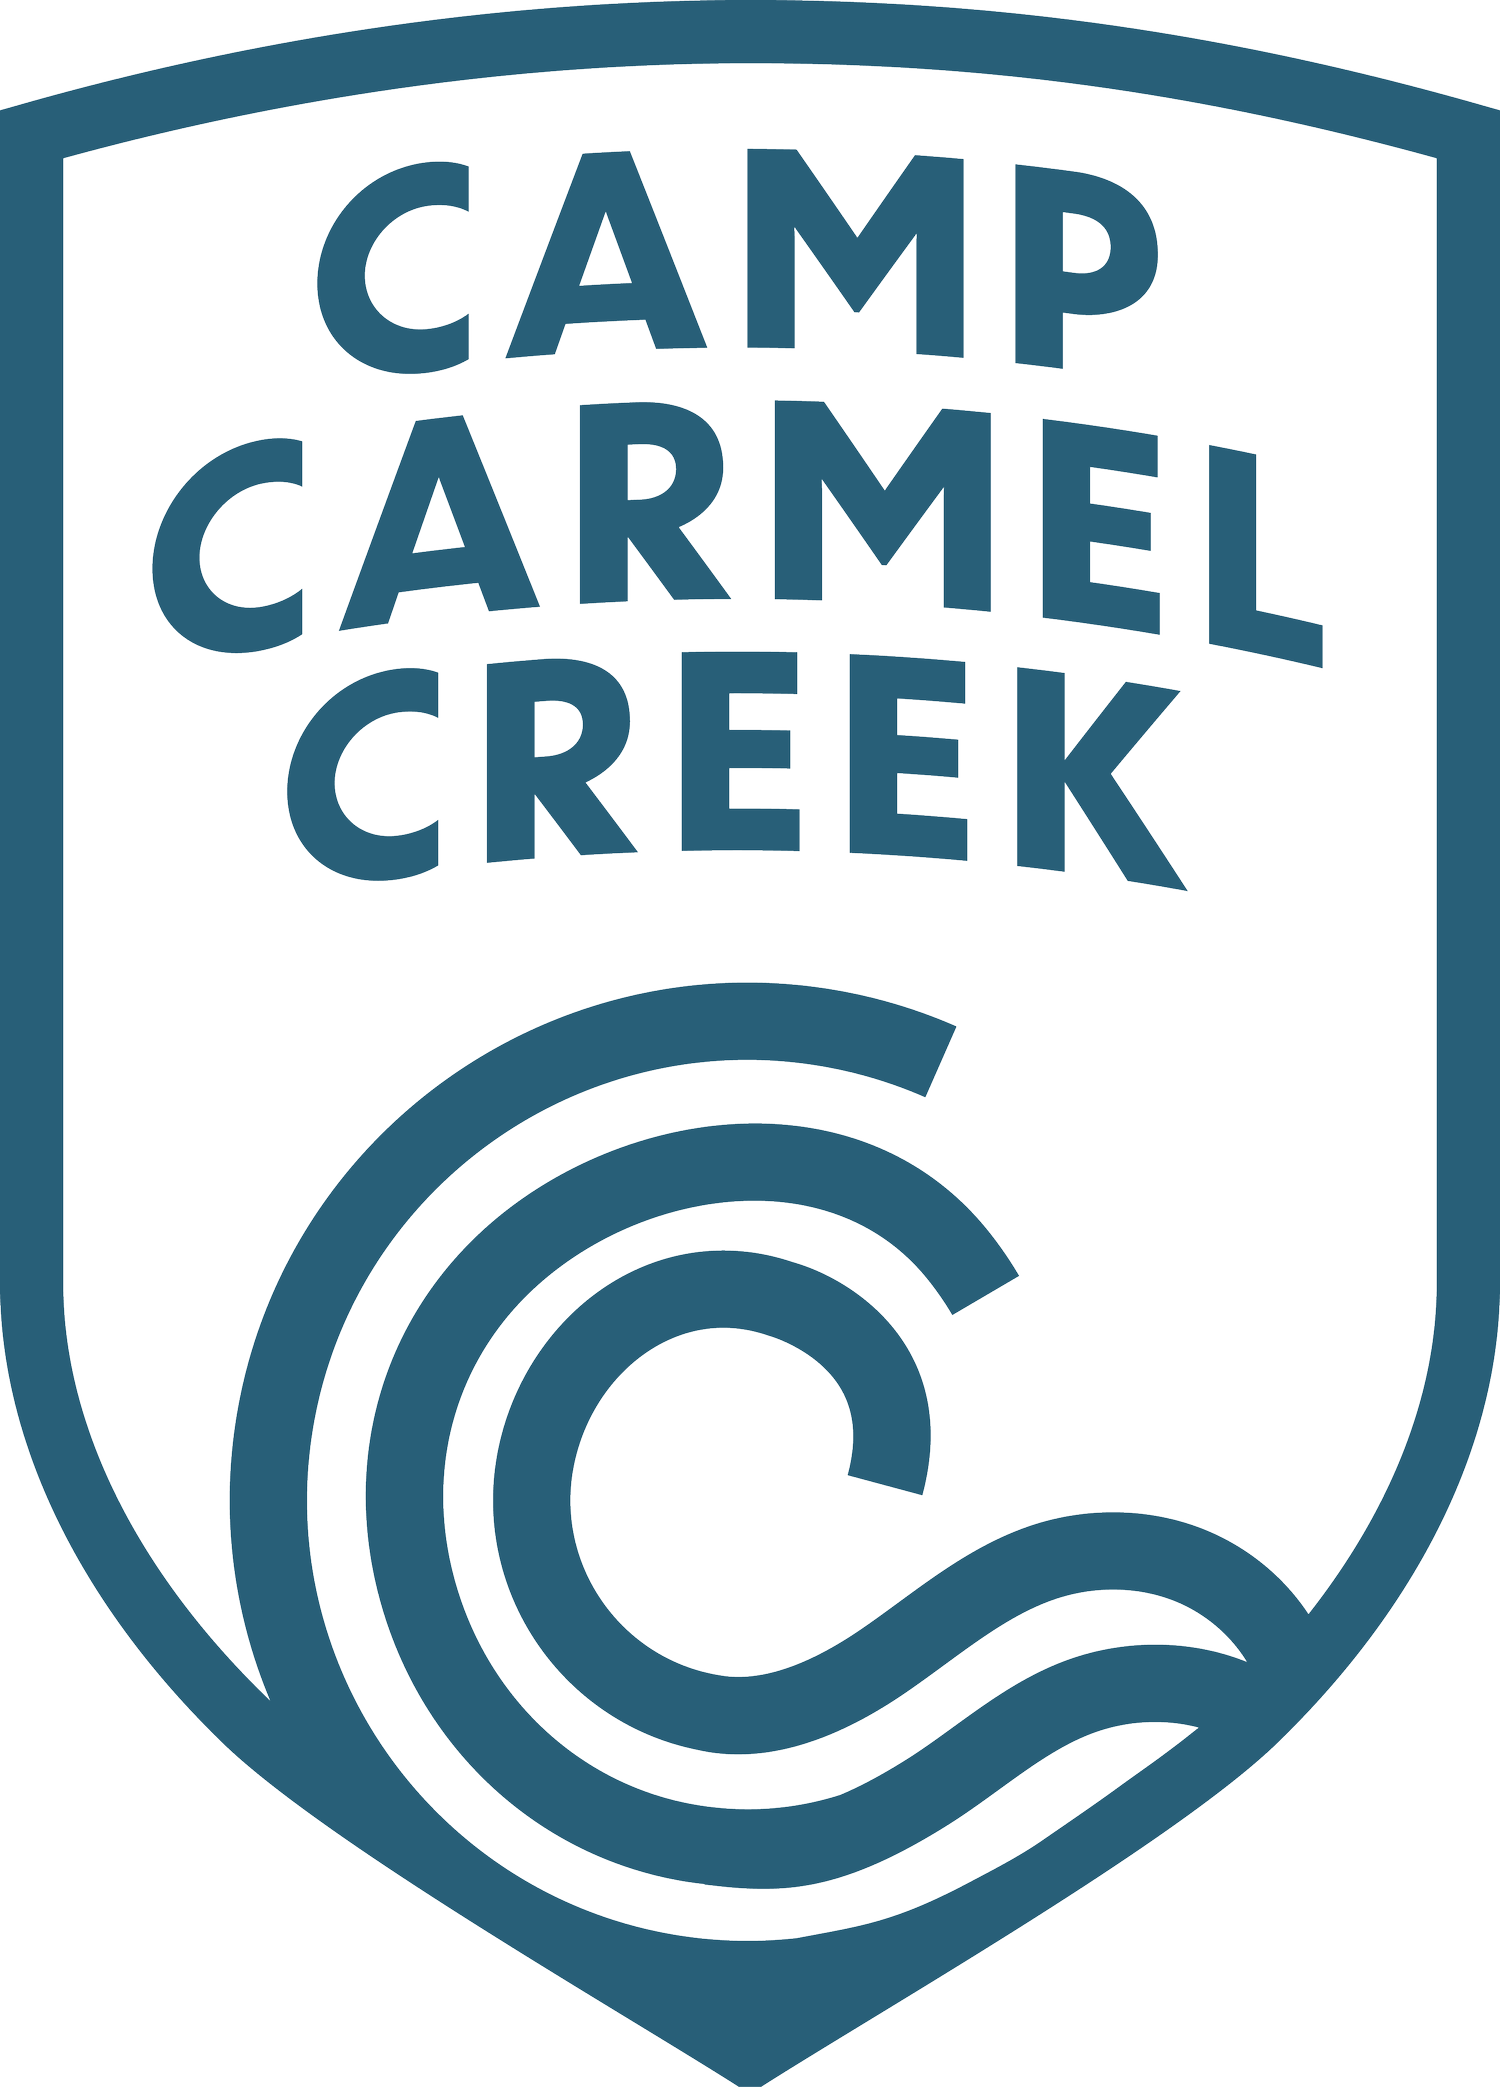 Camp Carmel Creek